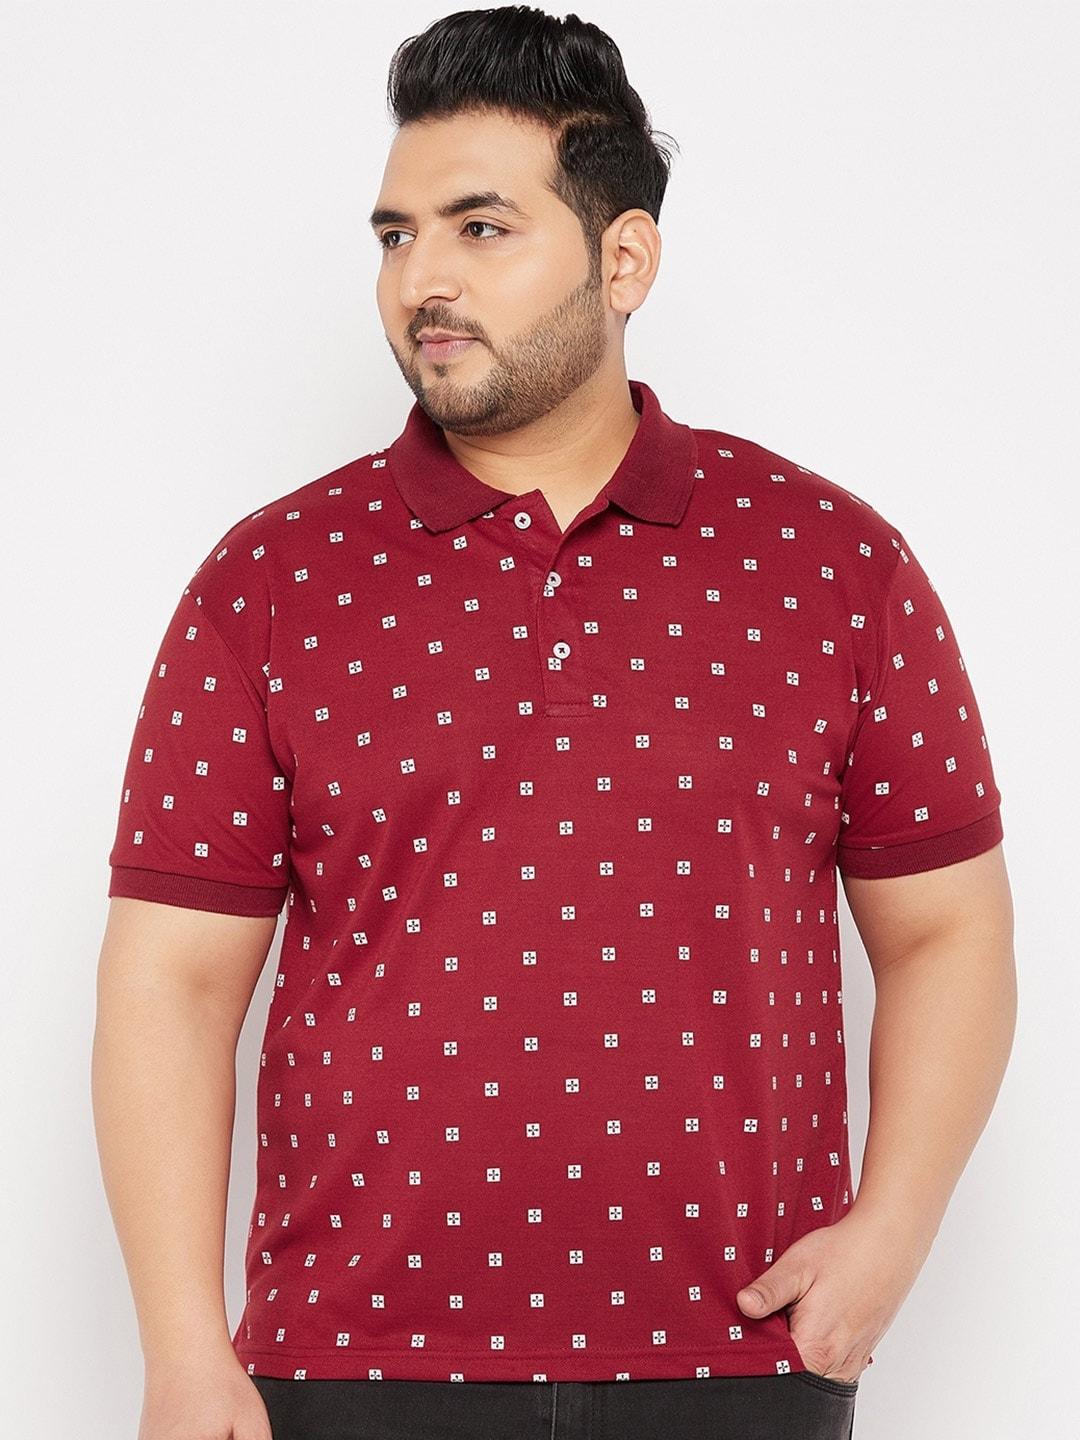 the-million-club-men-plus-size-geometric-printed-polo-collar-cotton-t-shirt